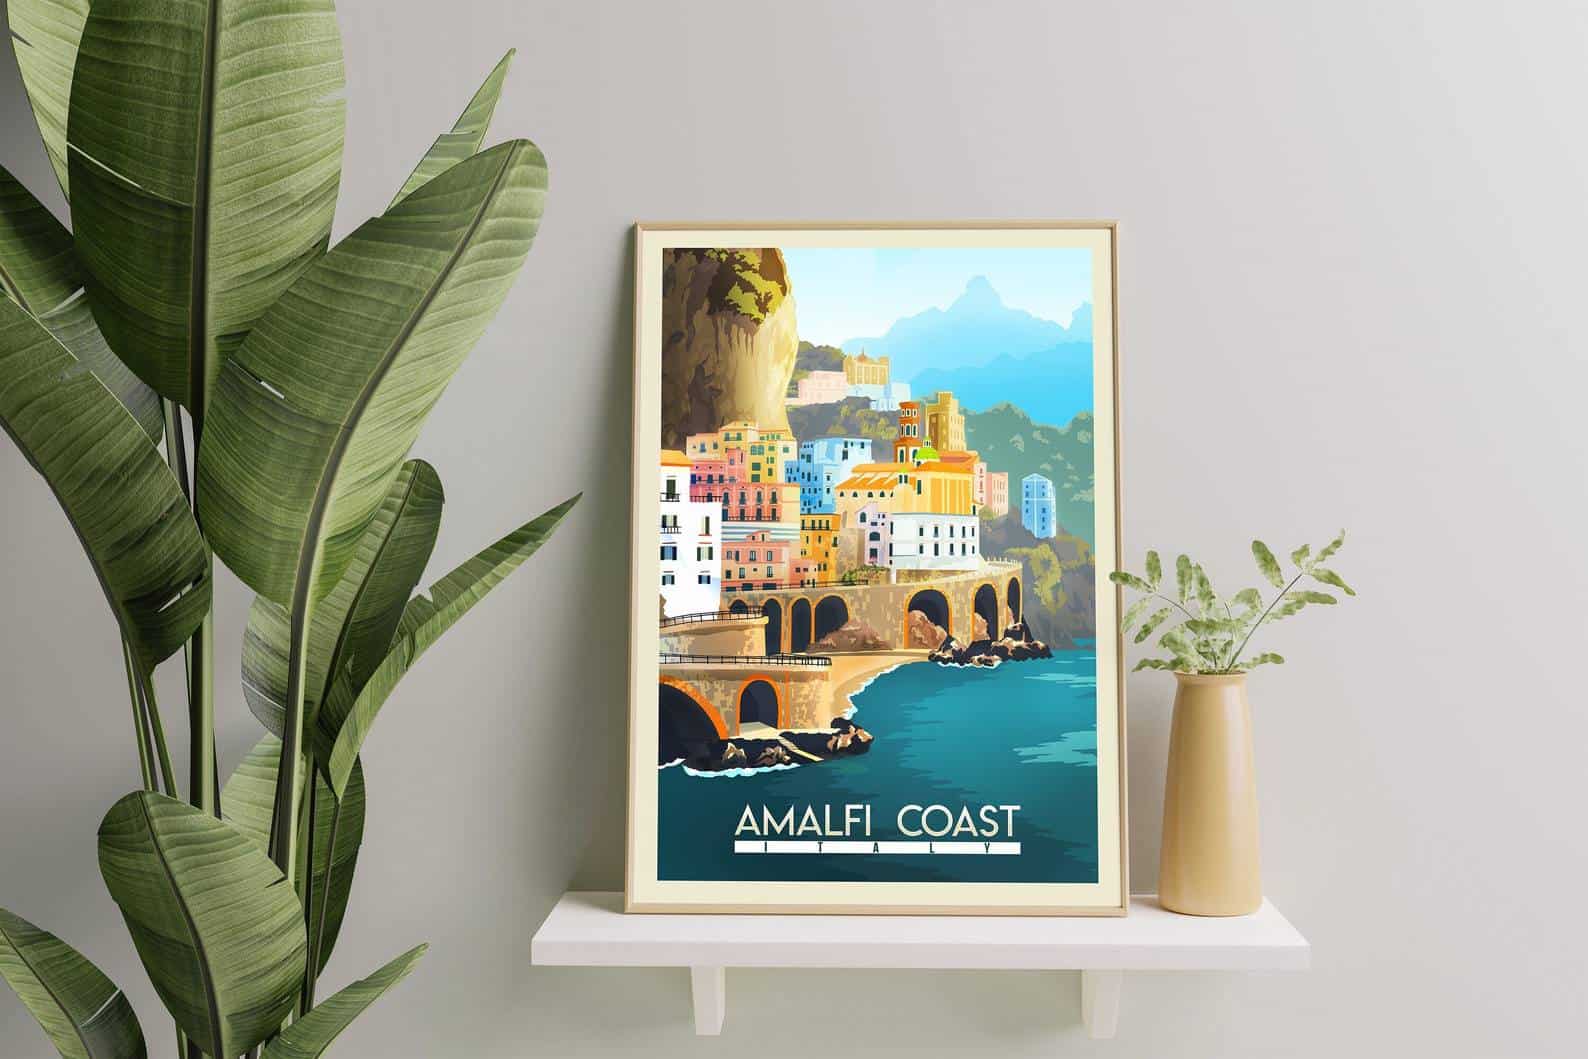 Amalfi Coast Print from Italy from Twenty Five Store Art